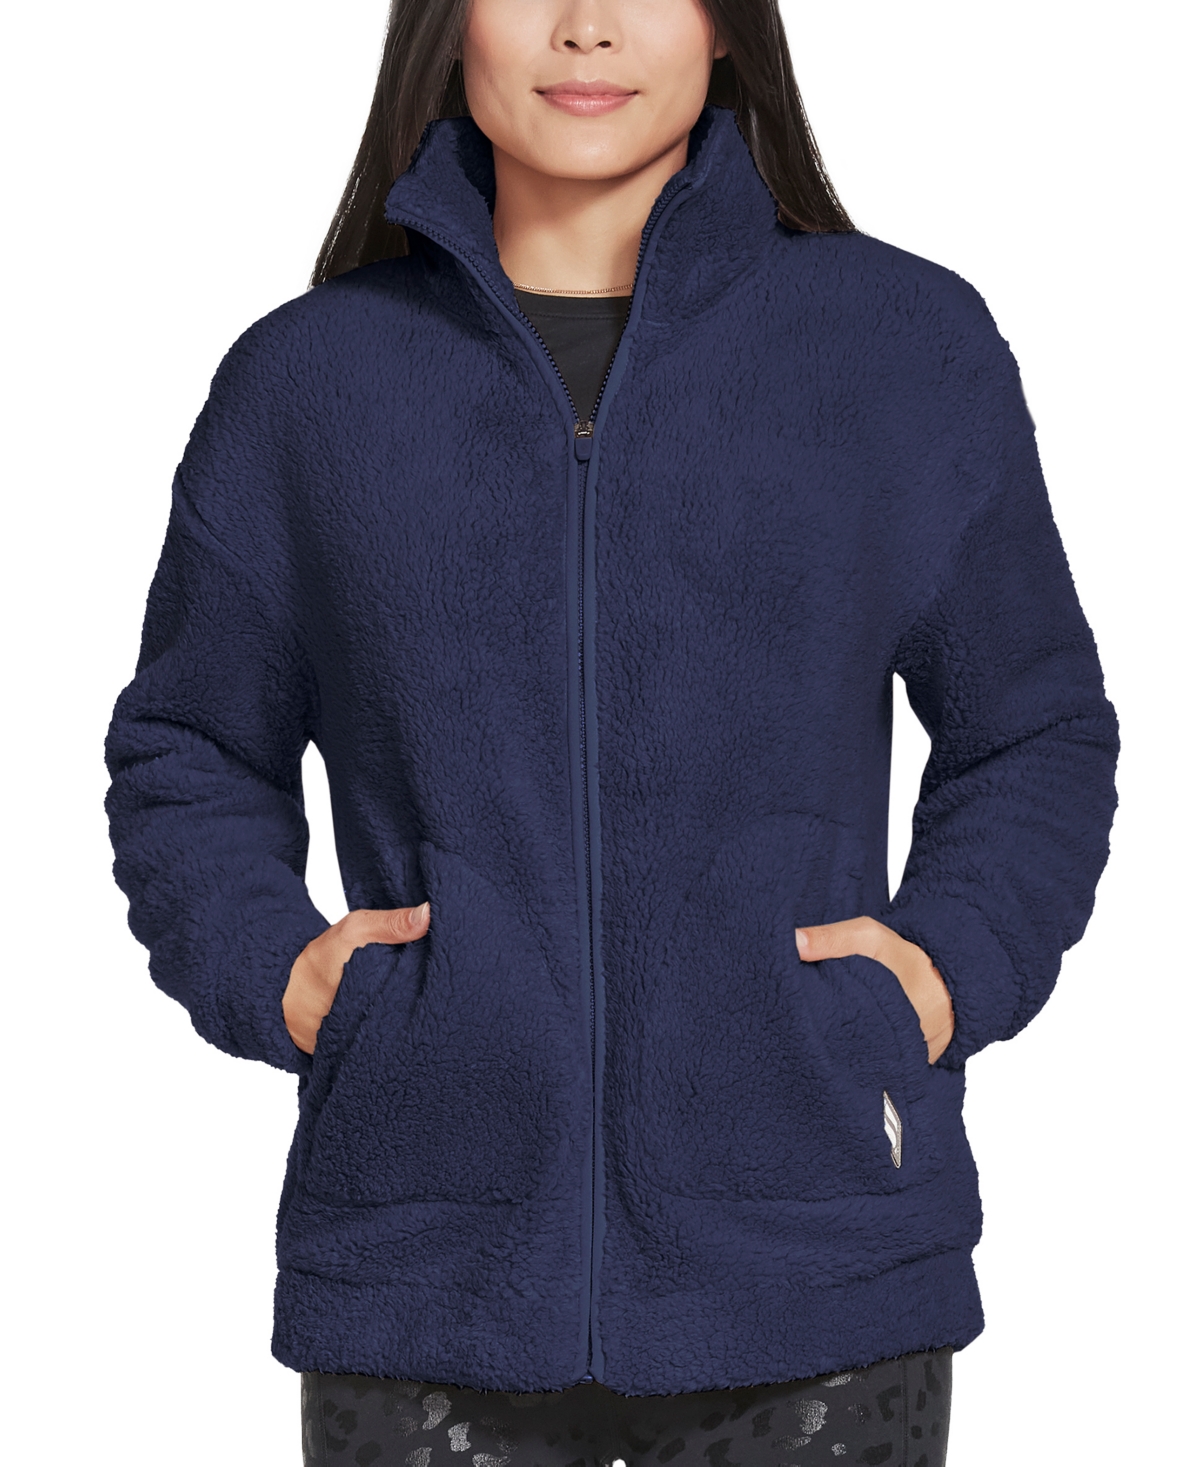 Skechers Women's Downtime Zippered Fleece Jacket In Blue Iris